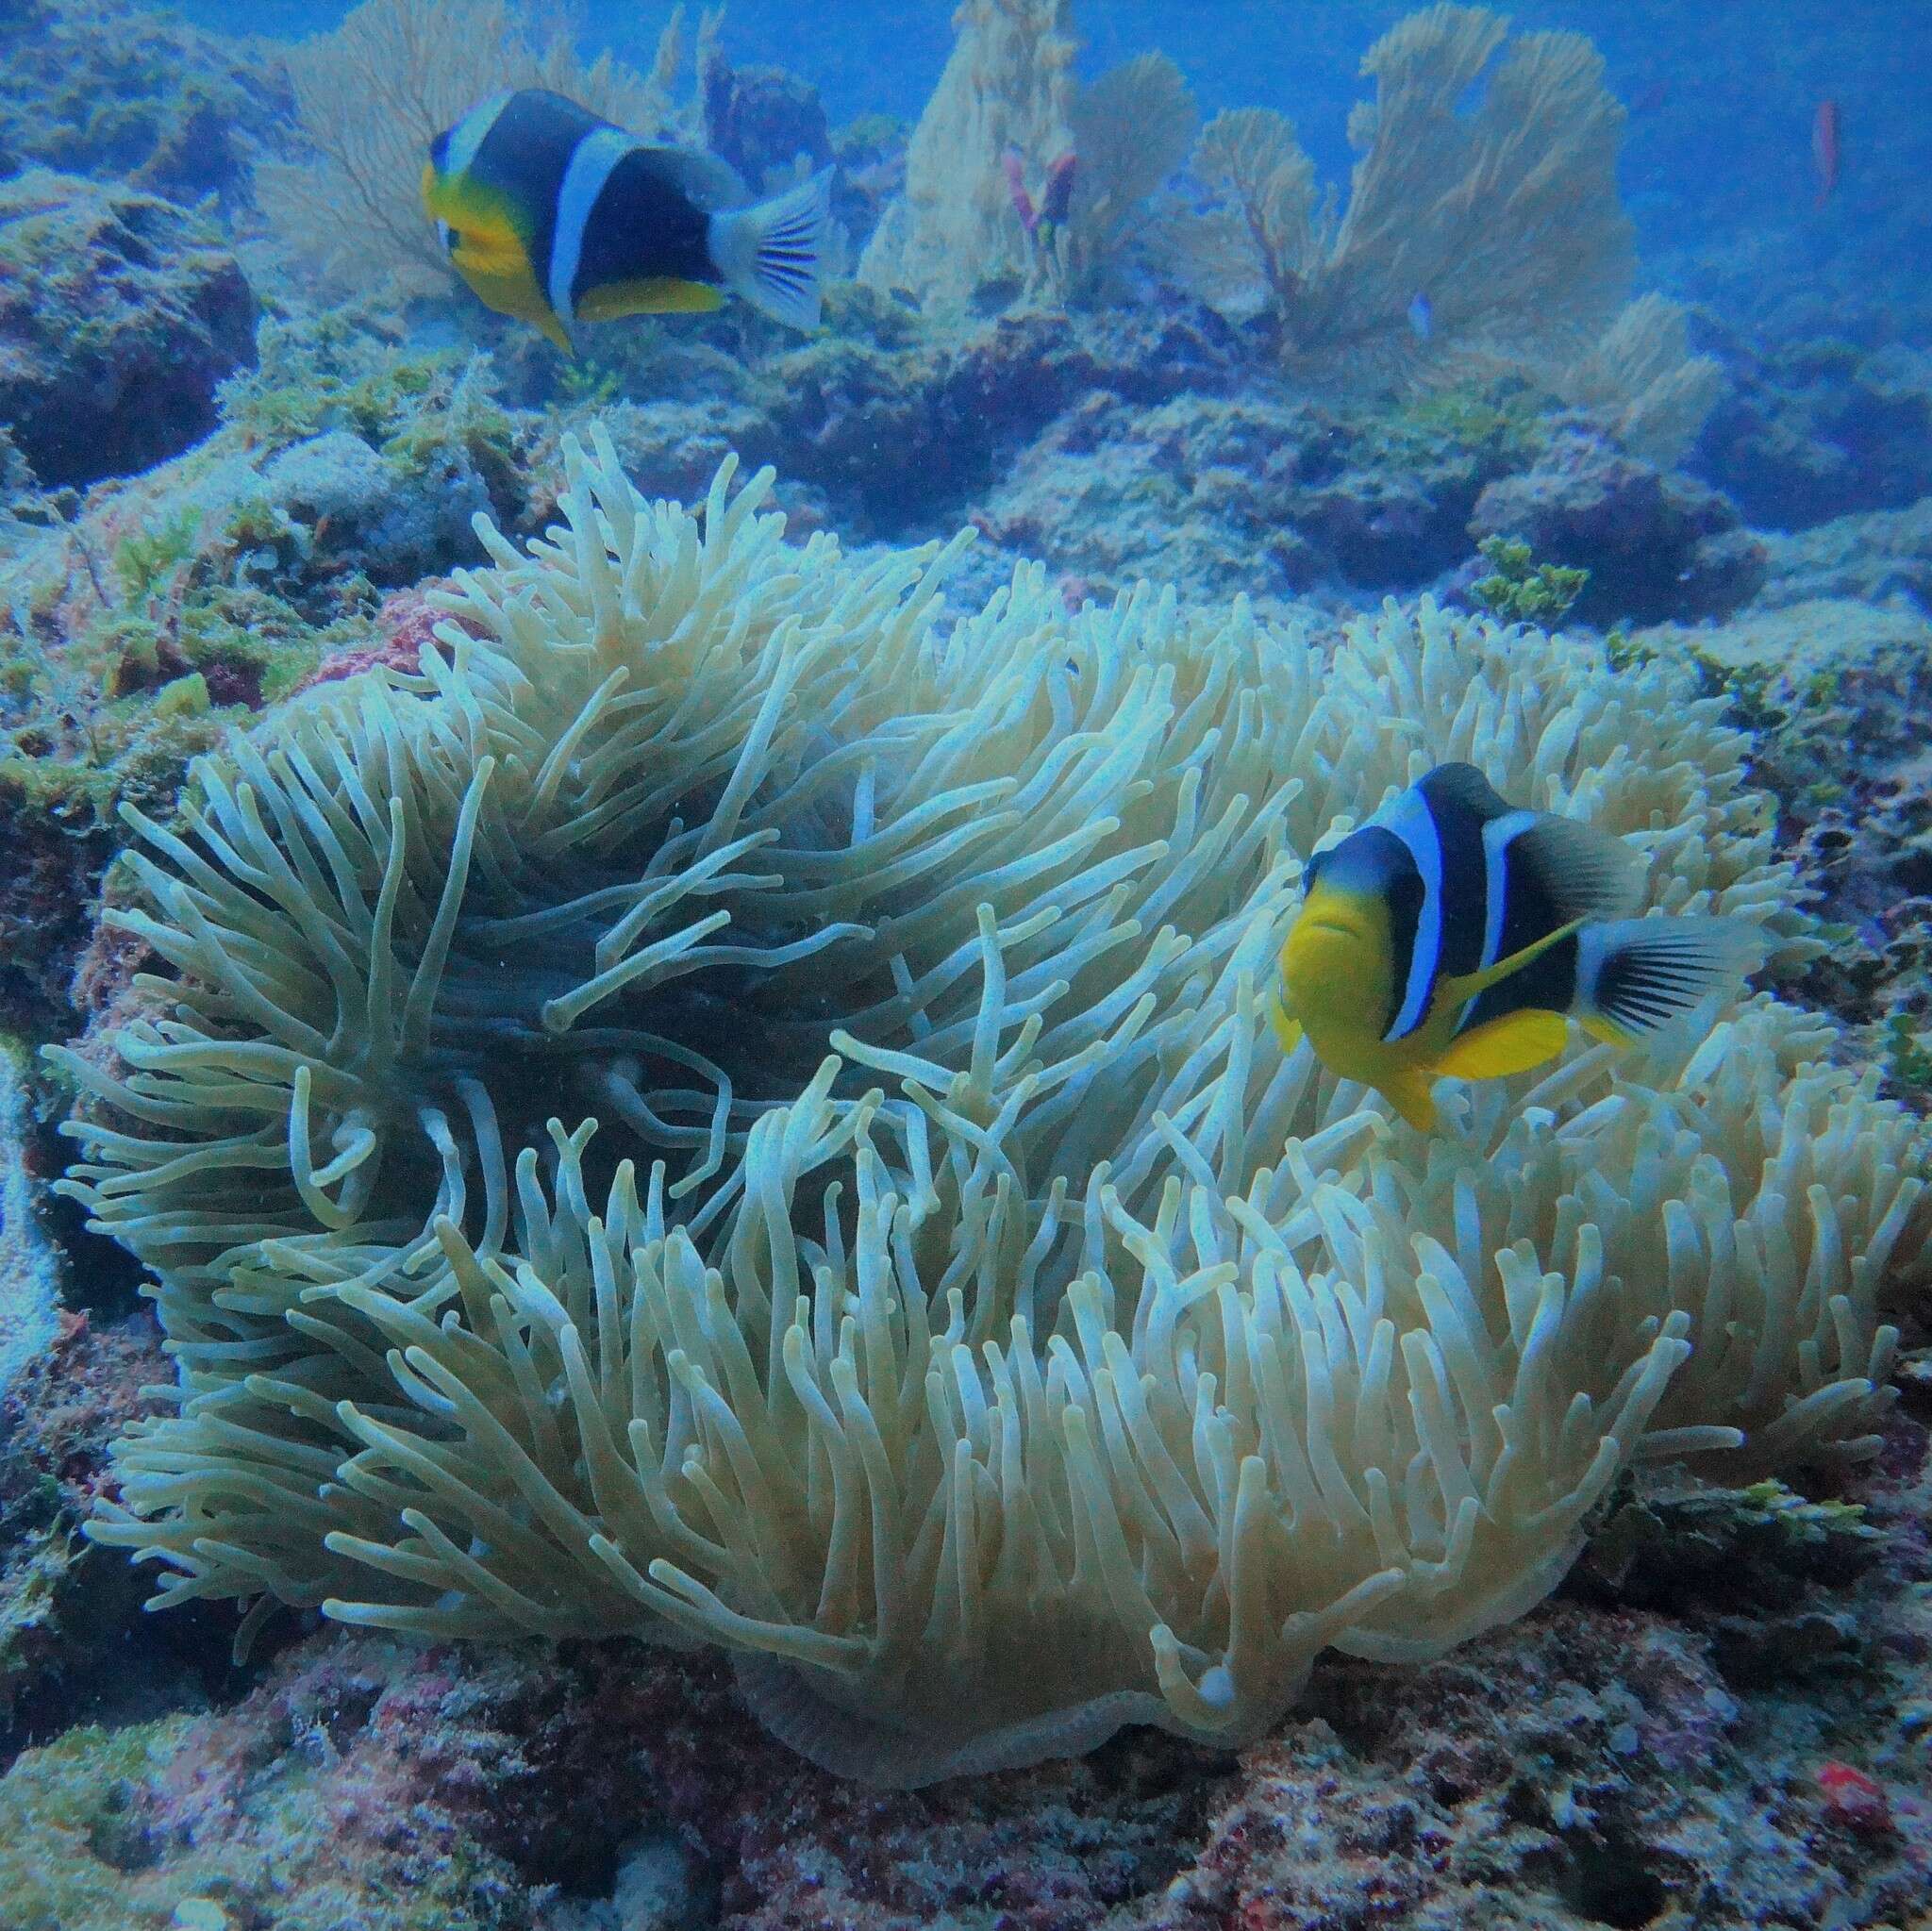 Image of Seychelles anemonefish